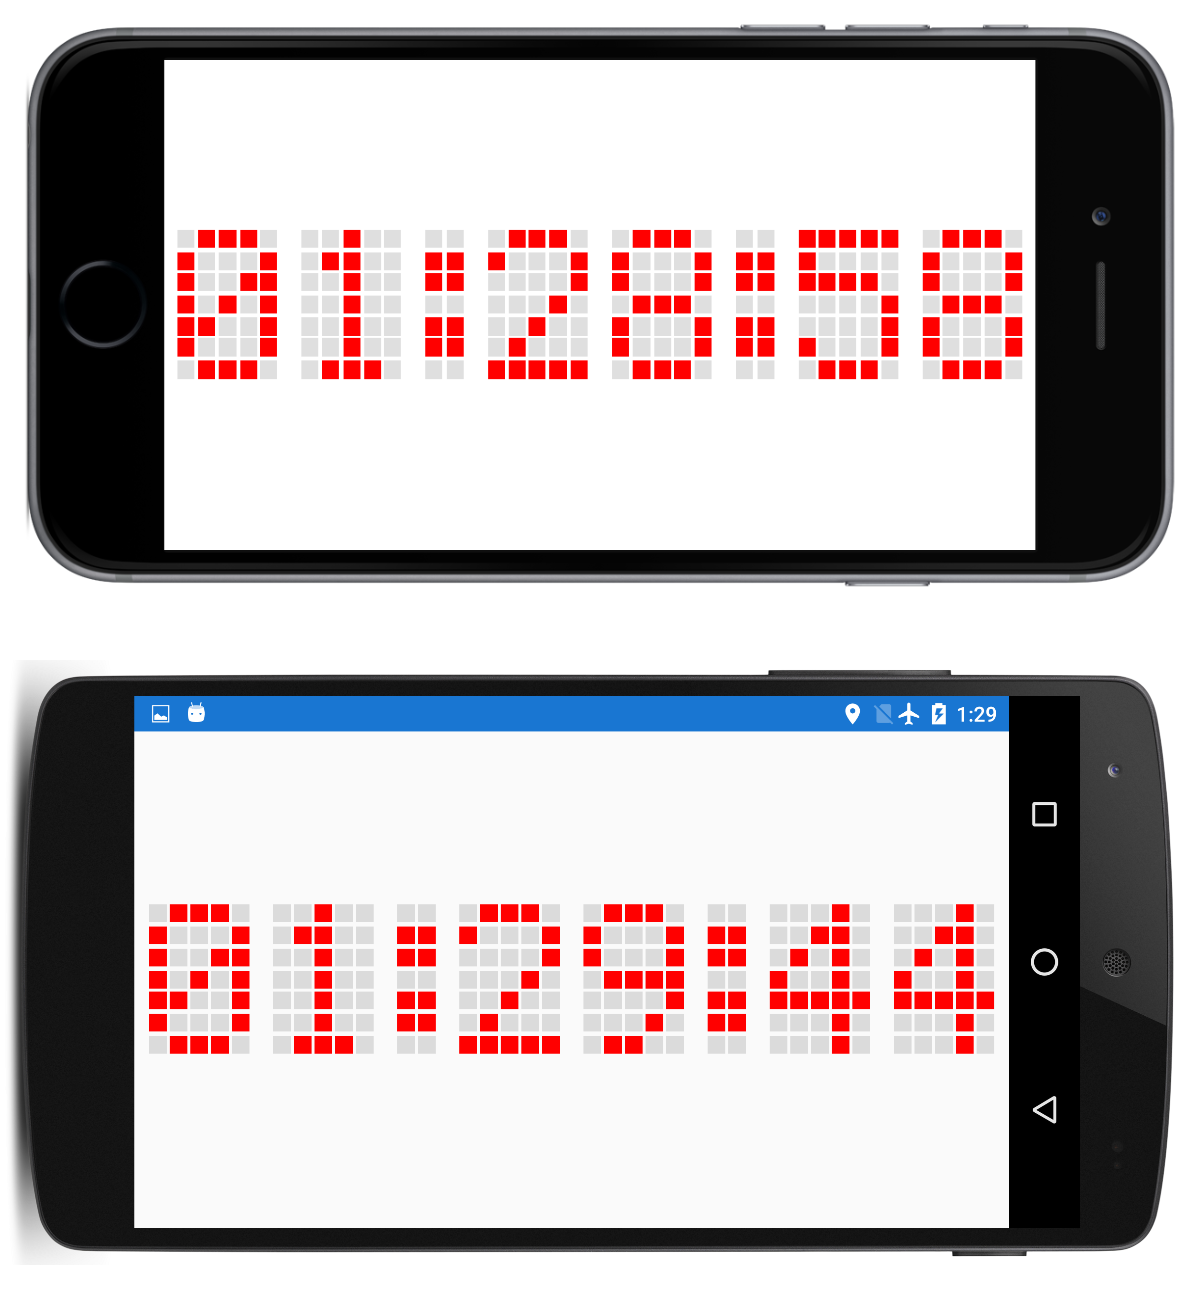 Dot-Matrix Clock application screenshot